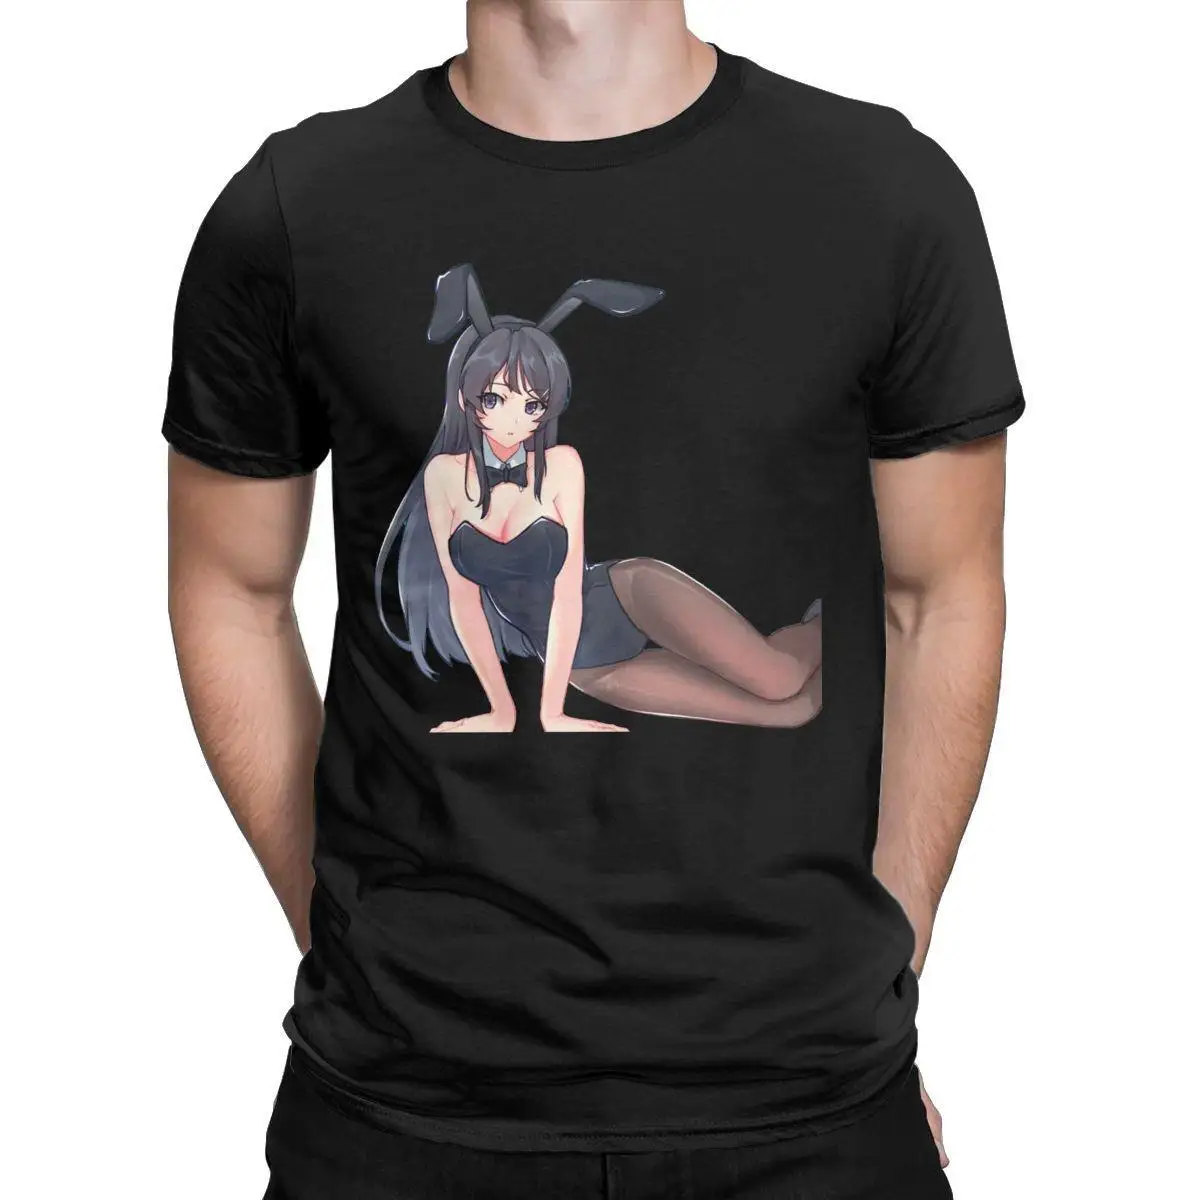 Mai Sakurajima Anime Girl T Shirt for Men 100% Cotton Novelty T-Shirts O Neck Tee Shirt Short Sleeve Clothes Graphic Printed